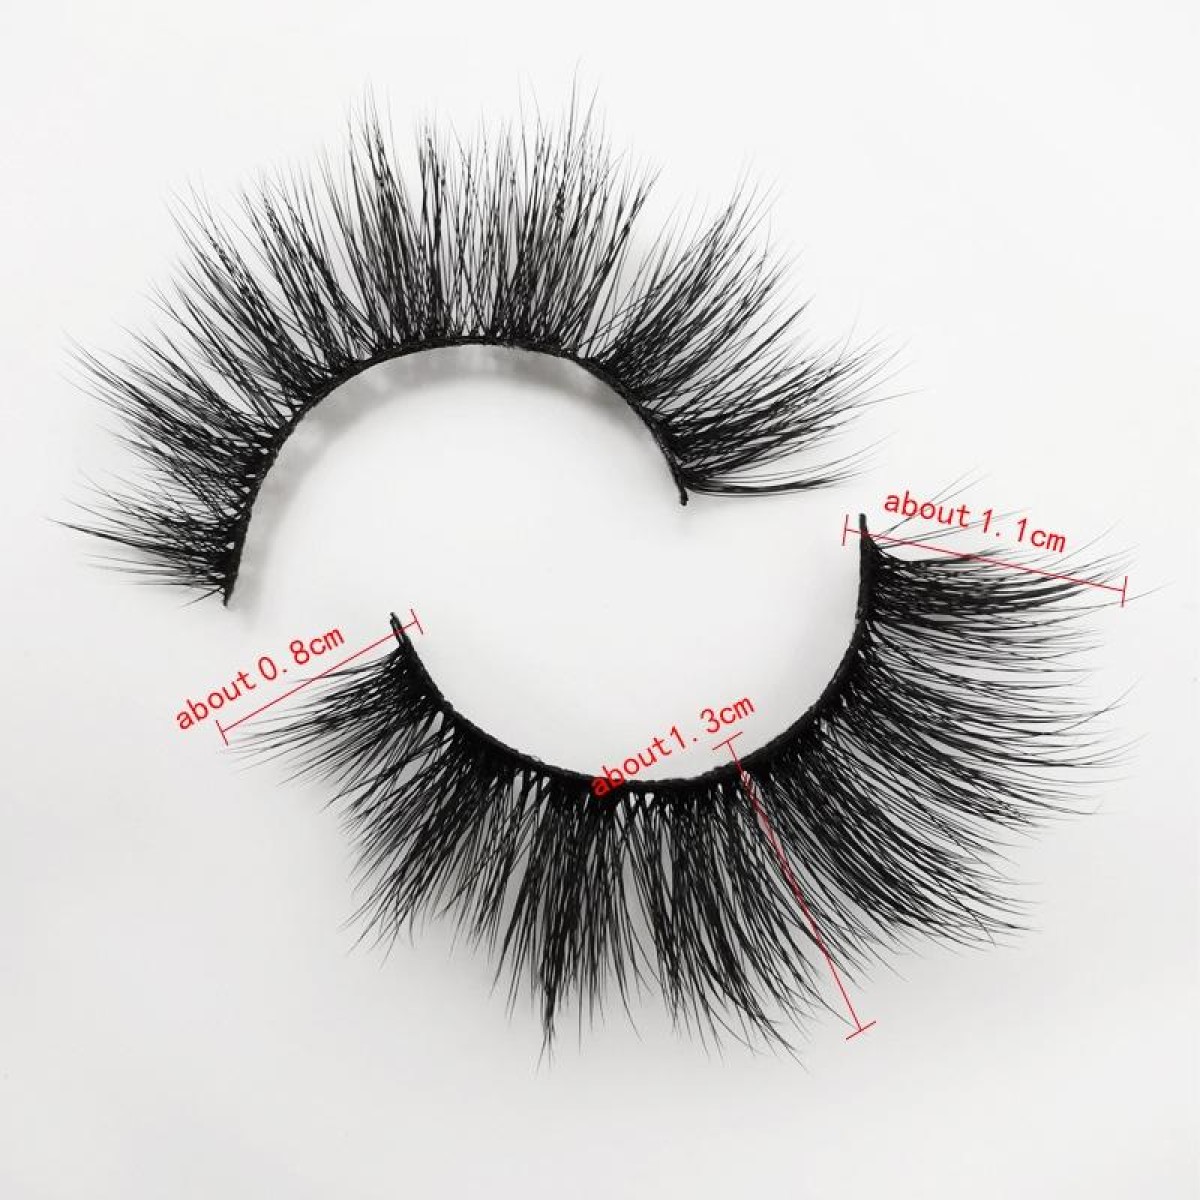 ShidiShangpin 3D Mink False Eyelashes Natural Three-Dimensional 7 Pairs Of Eyelashes Set(Thursday)